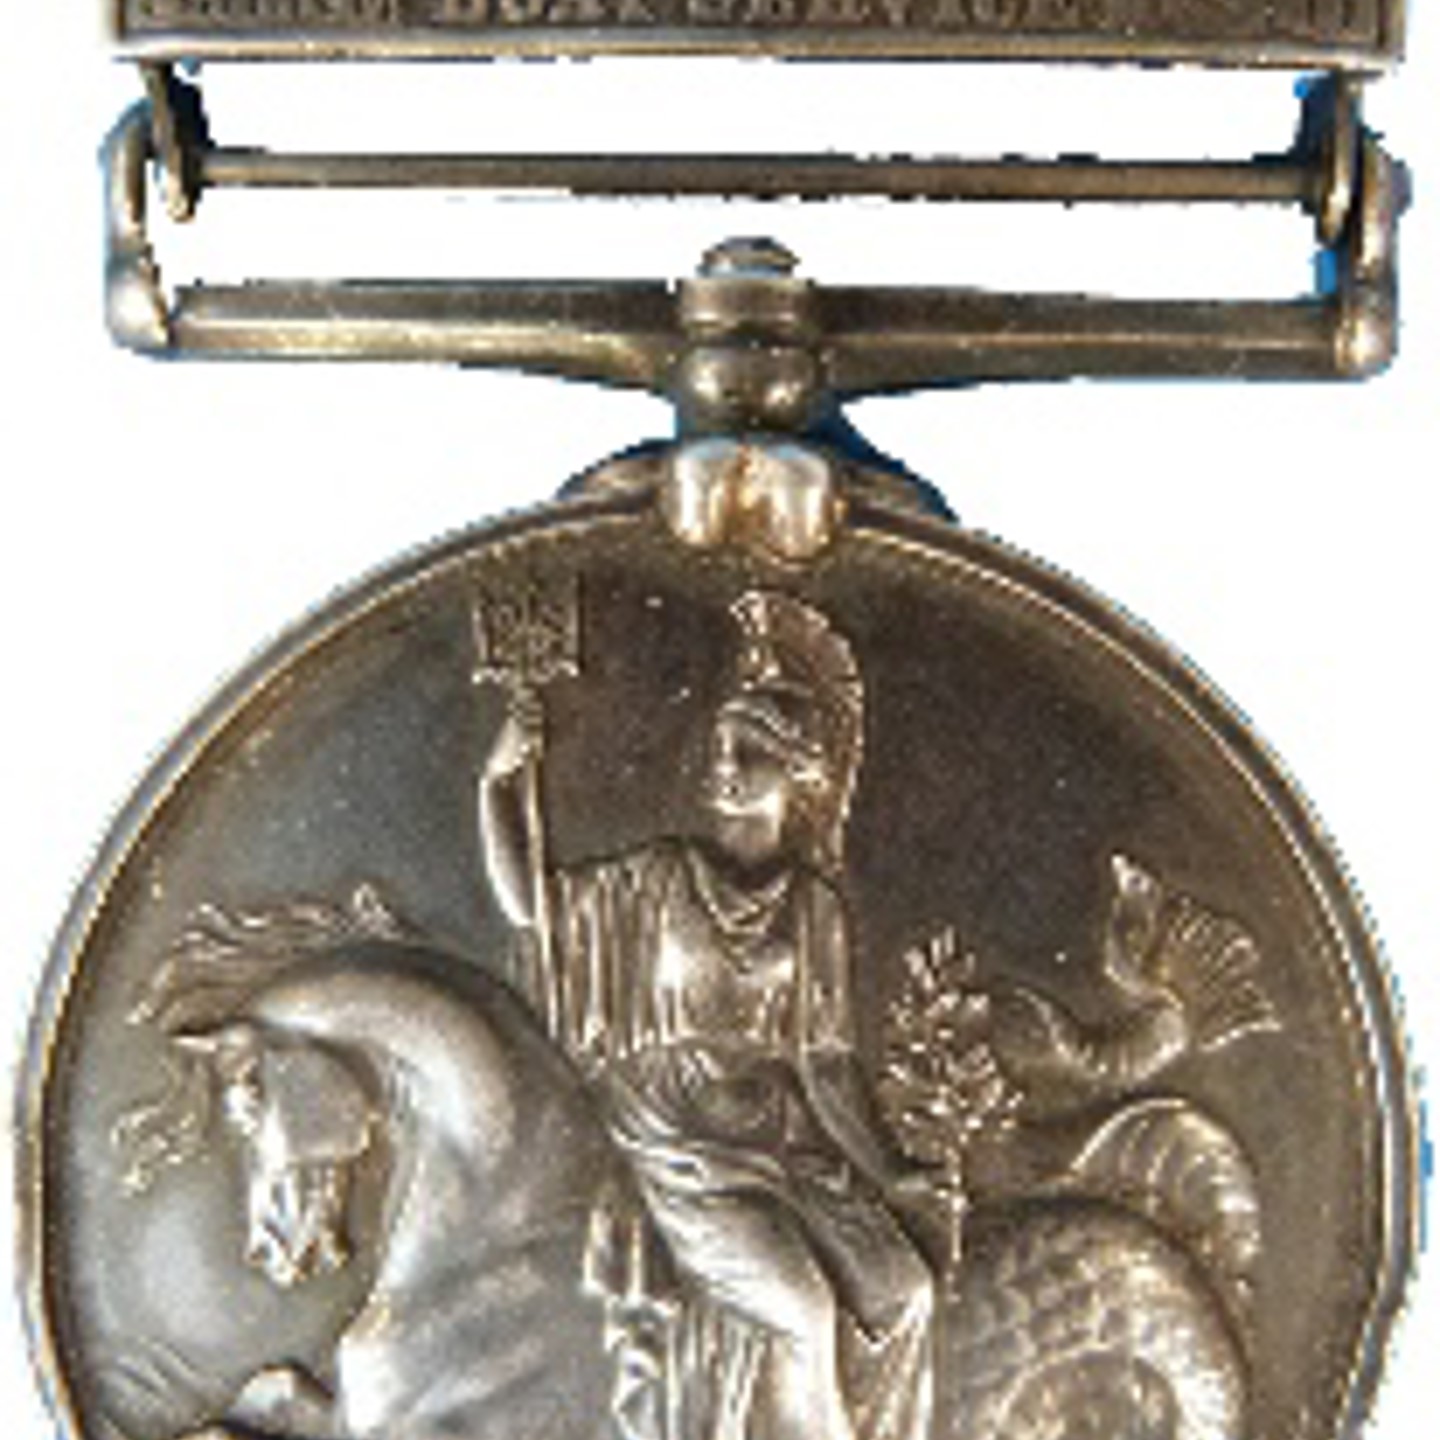 Naval General Service Medal Sold For £12,200